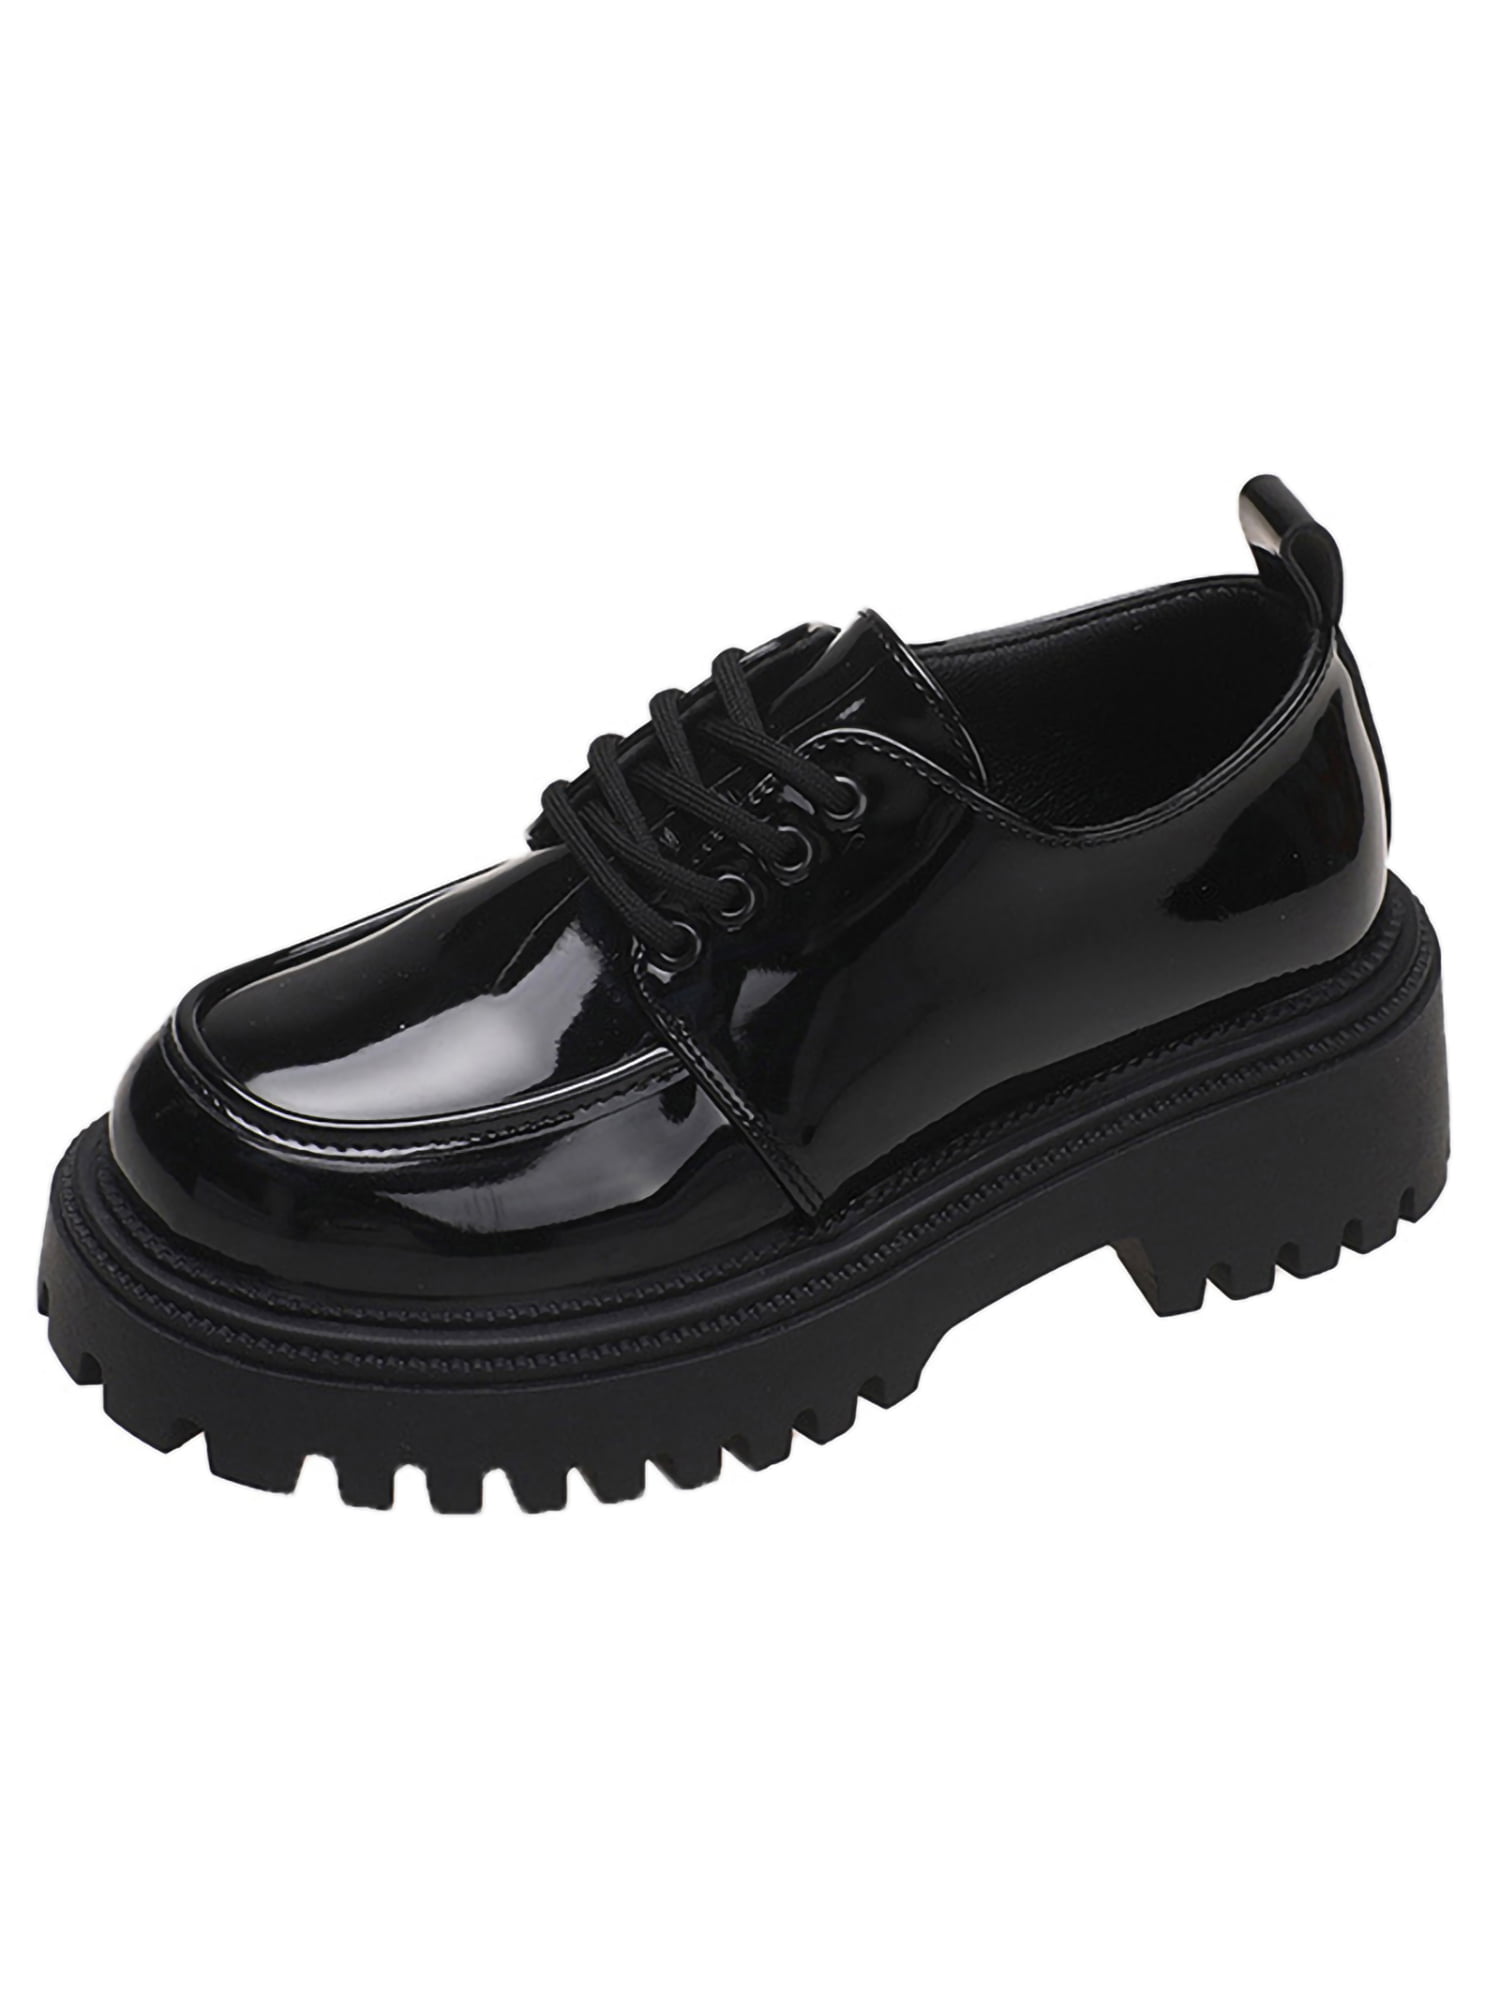 Lacyhop Women Loafers Lace Up Casual Walking Shoe Platform Dress Shoes School Round Toe Lightweight Comfort Bright Black 7 - Walmart.com